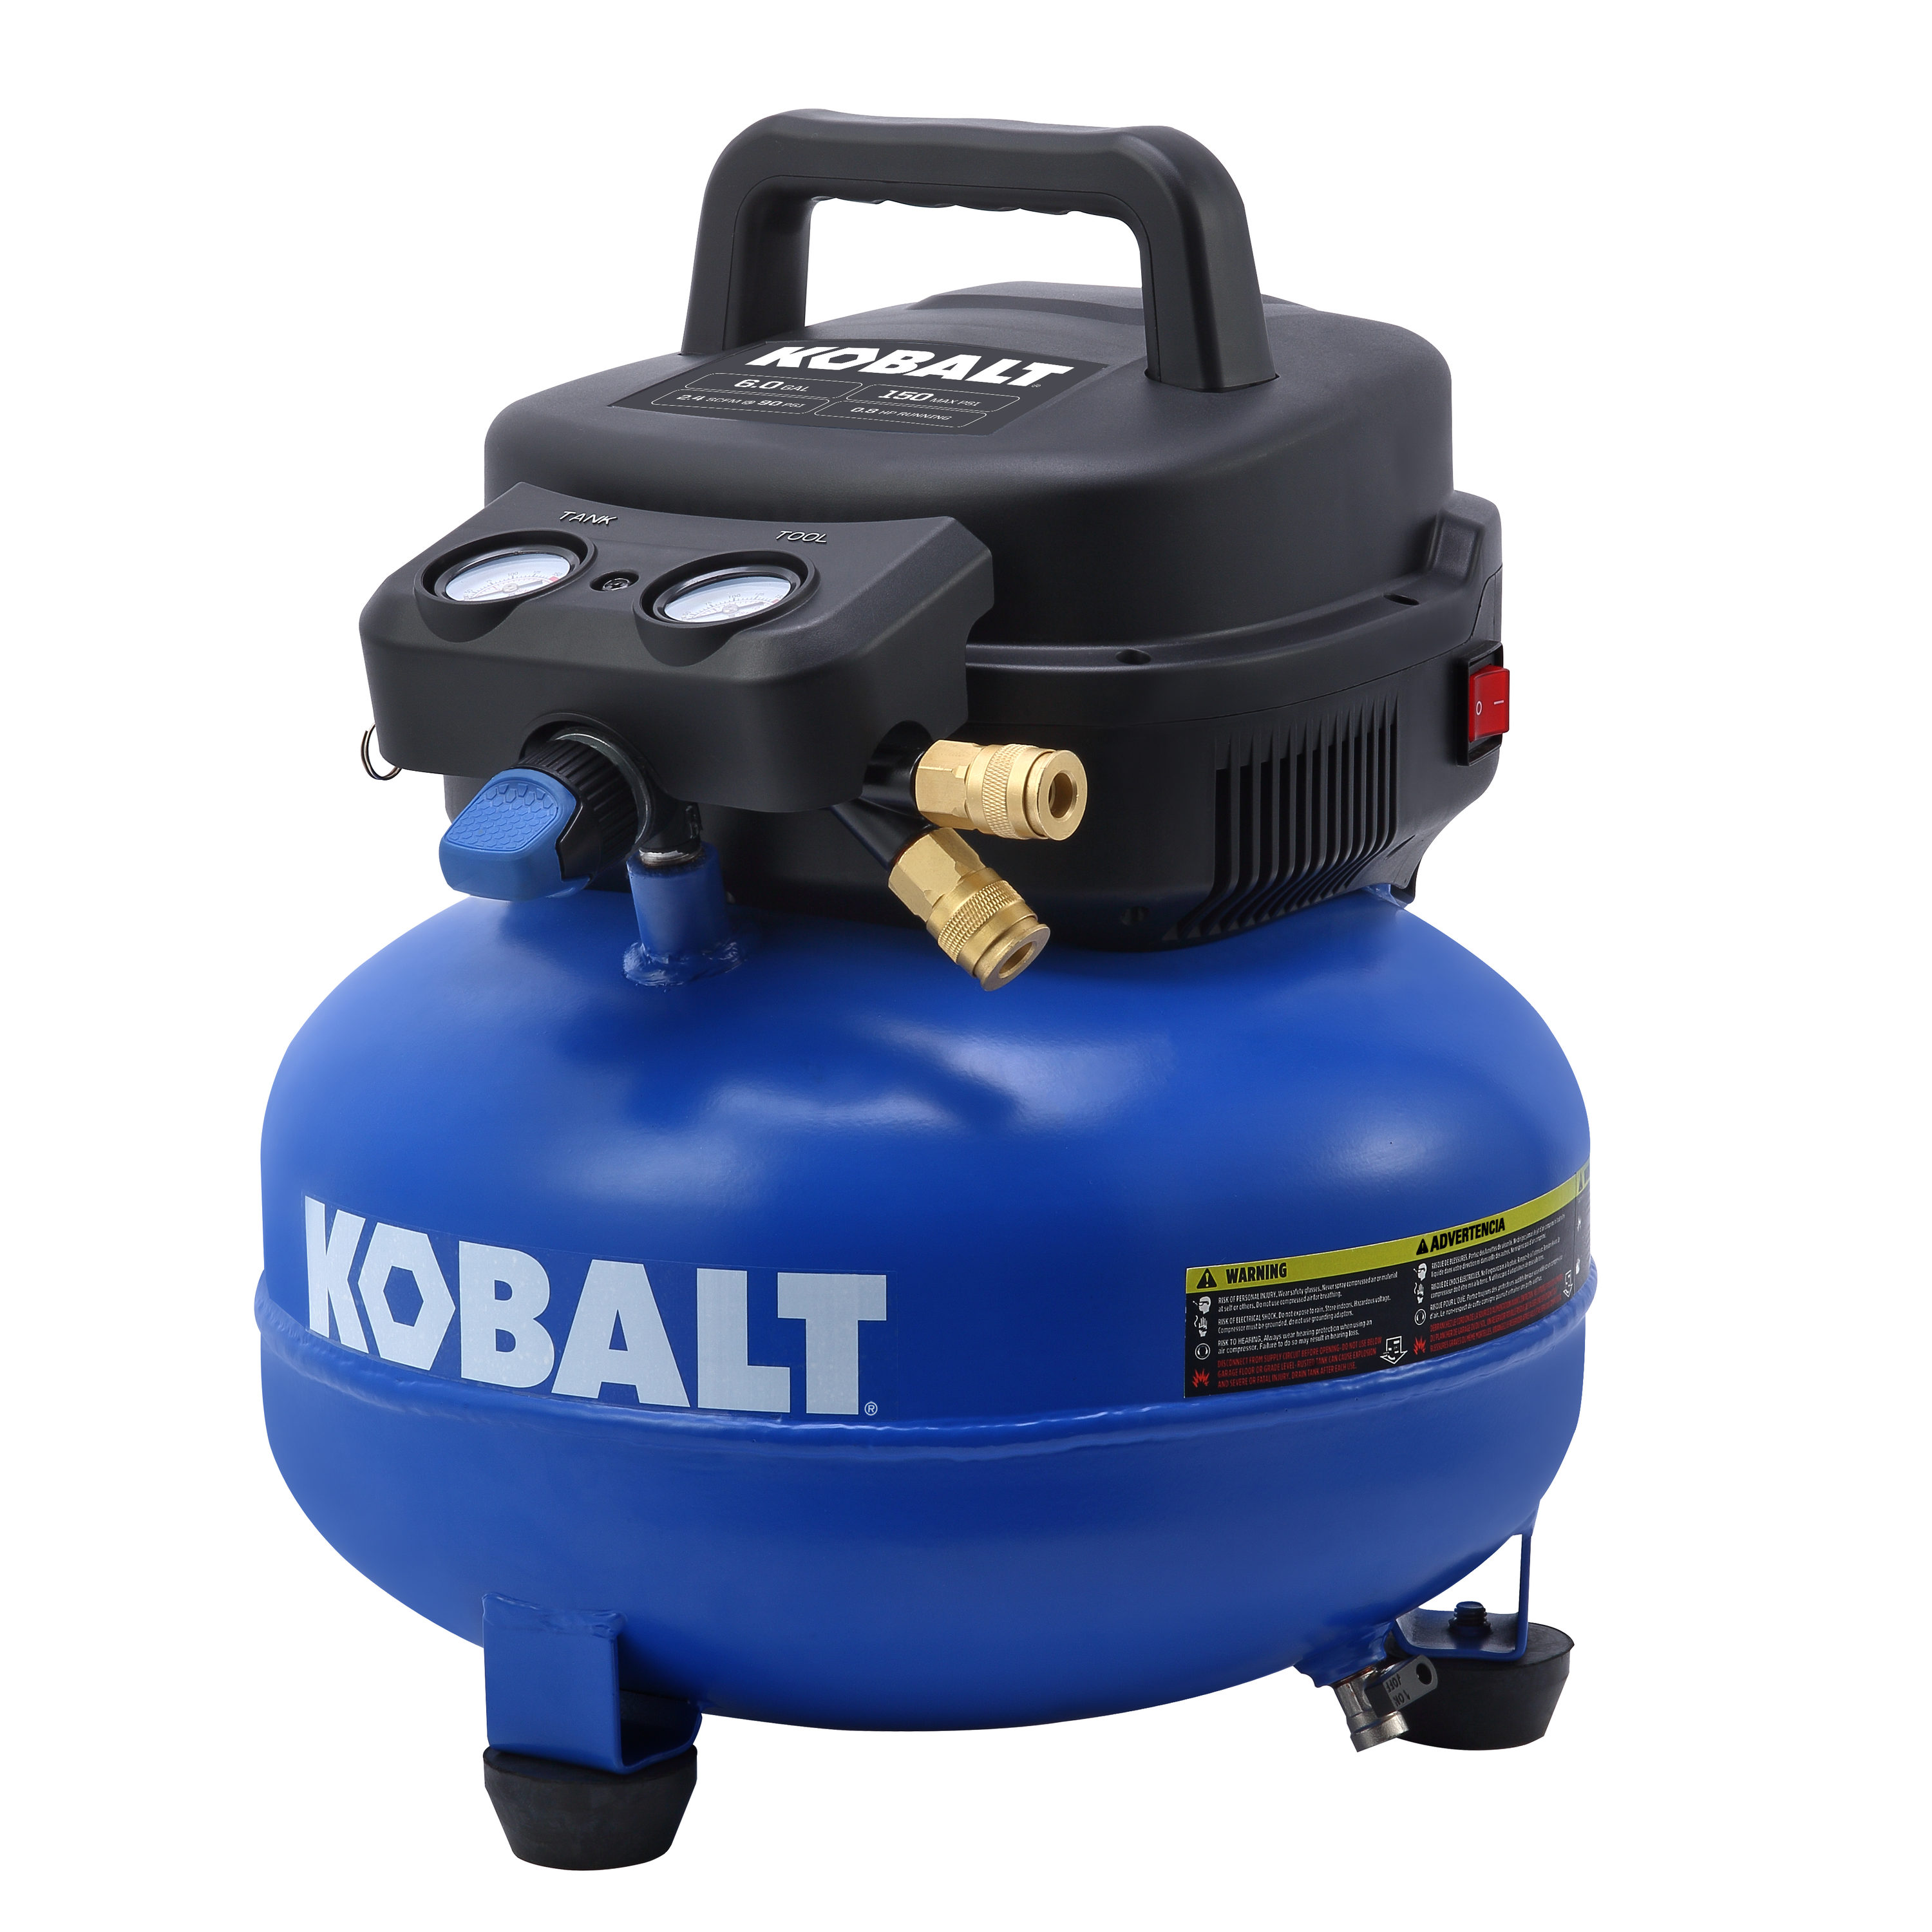 Kobalt 6-Gallon Single Stage Portable Corded Electric Pancake Air Compressor